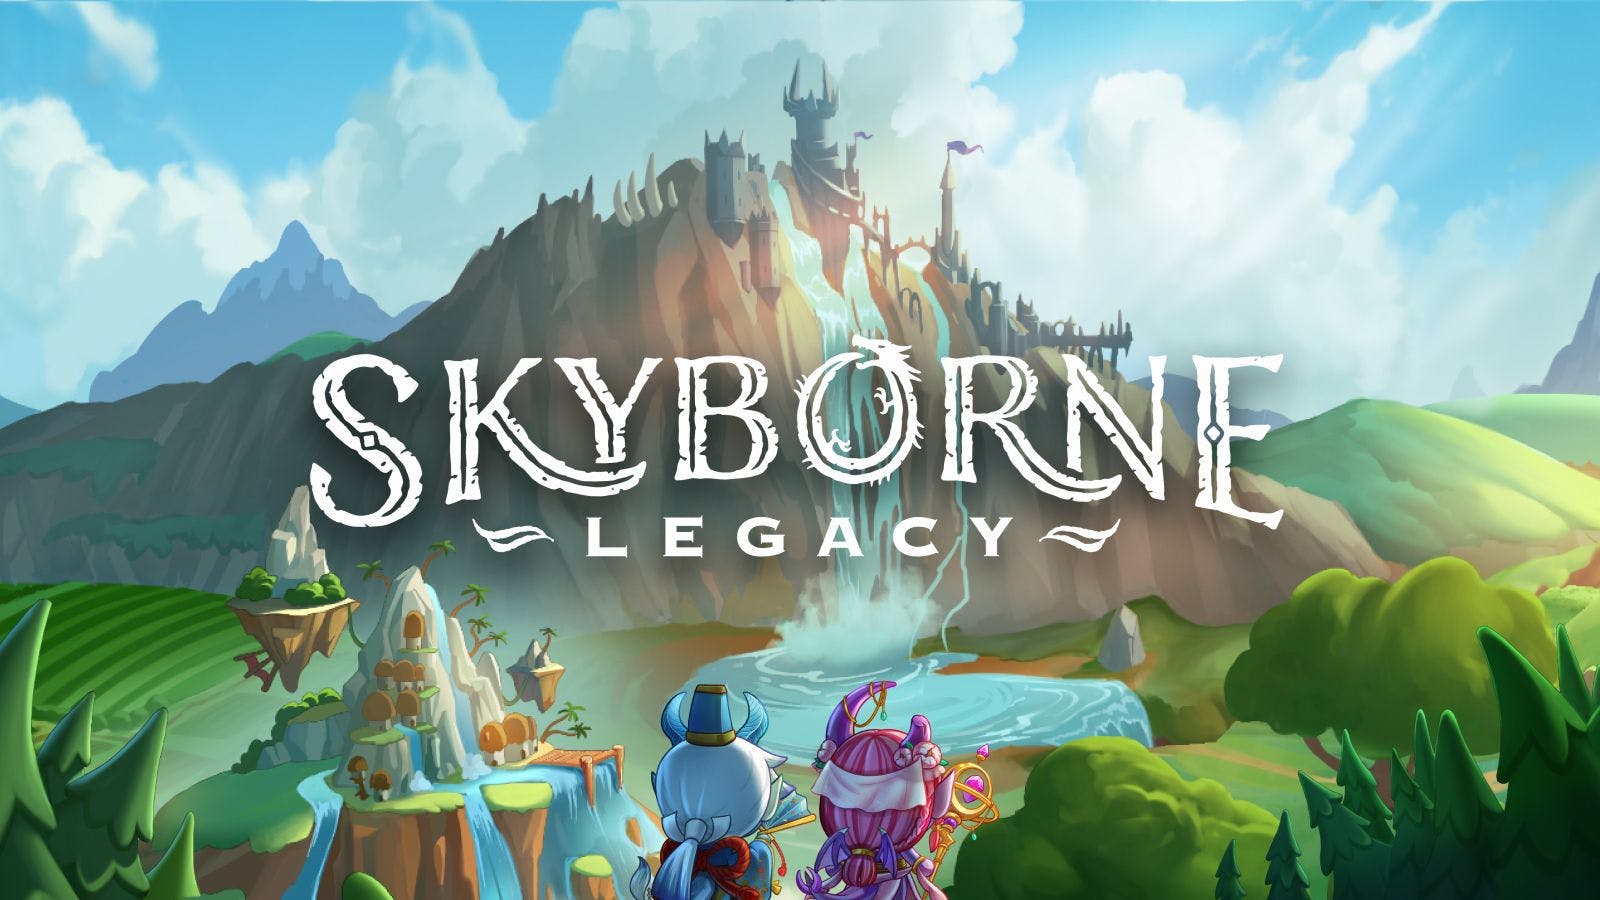 skyborne legacy key art.jpeg